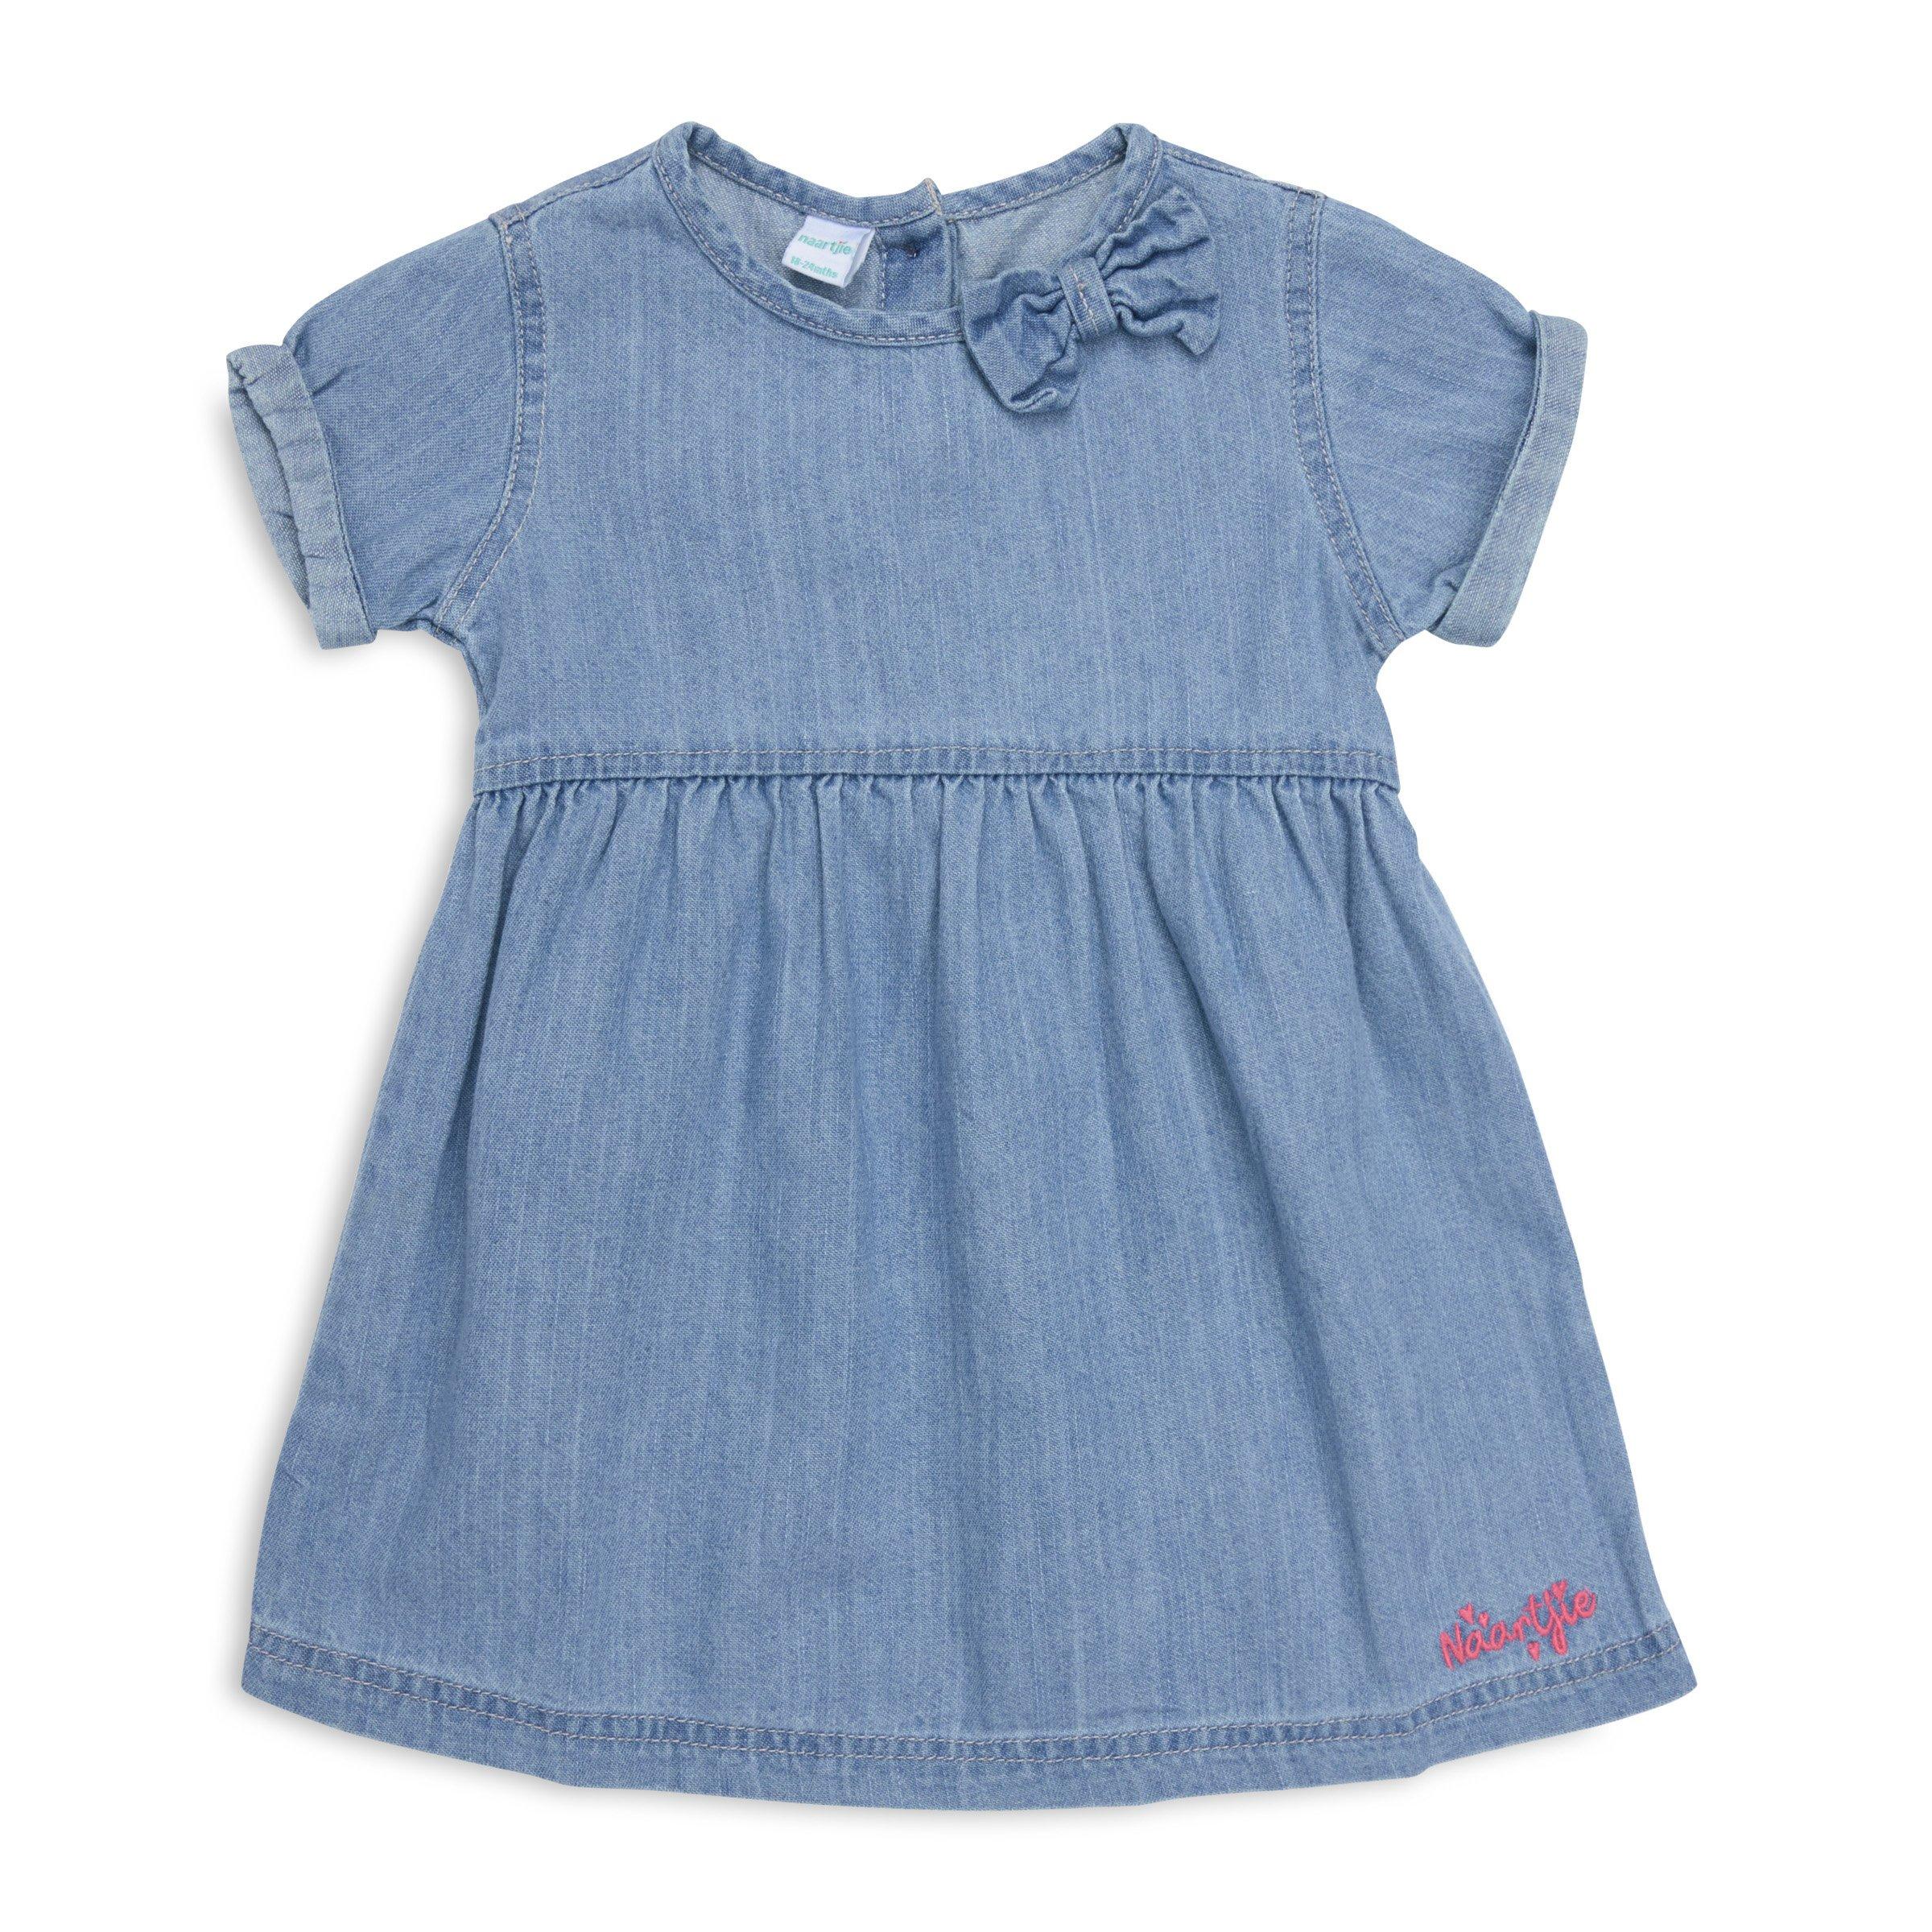 Buy Naartjie Baby Girl Tunic Dress Online | Truworths